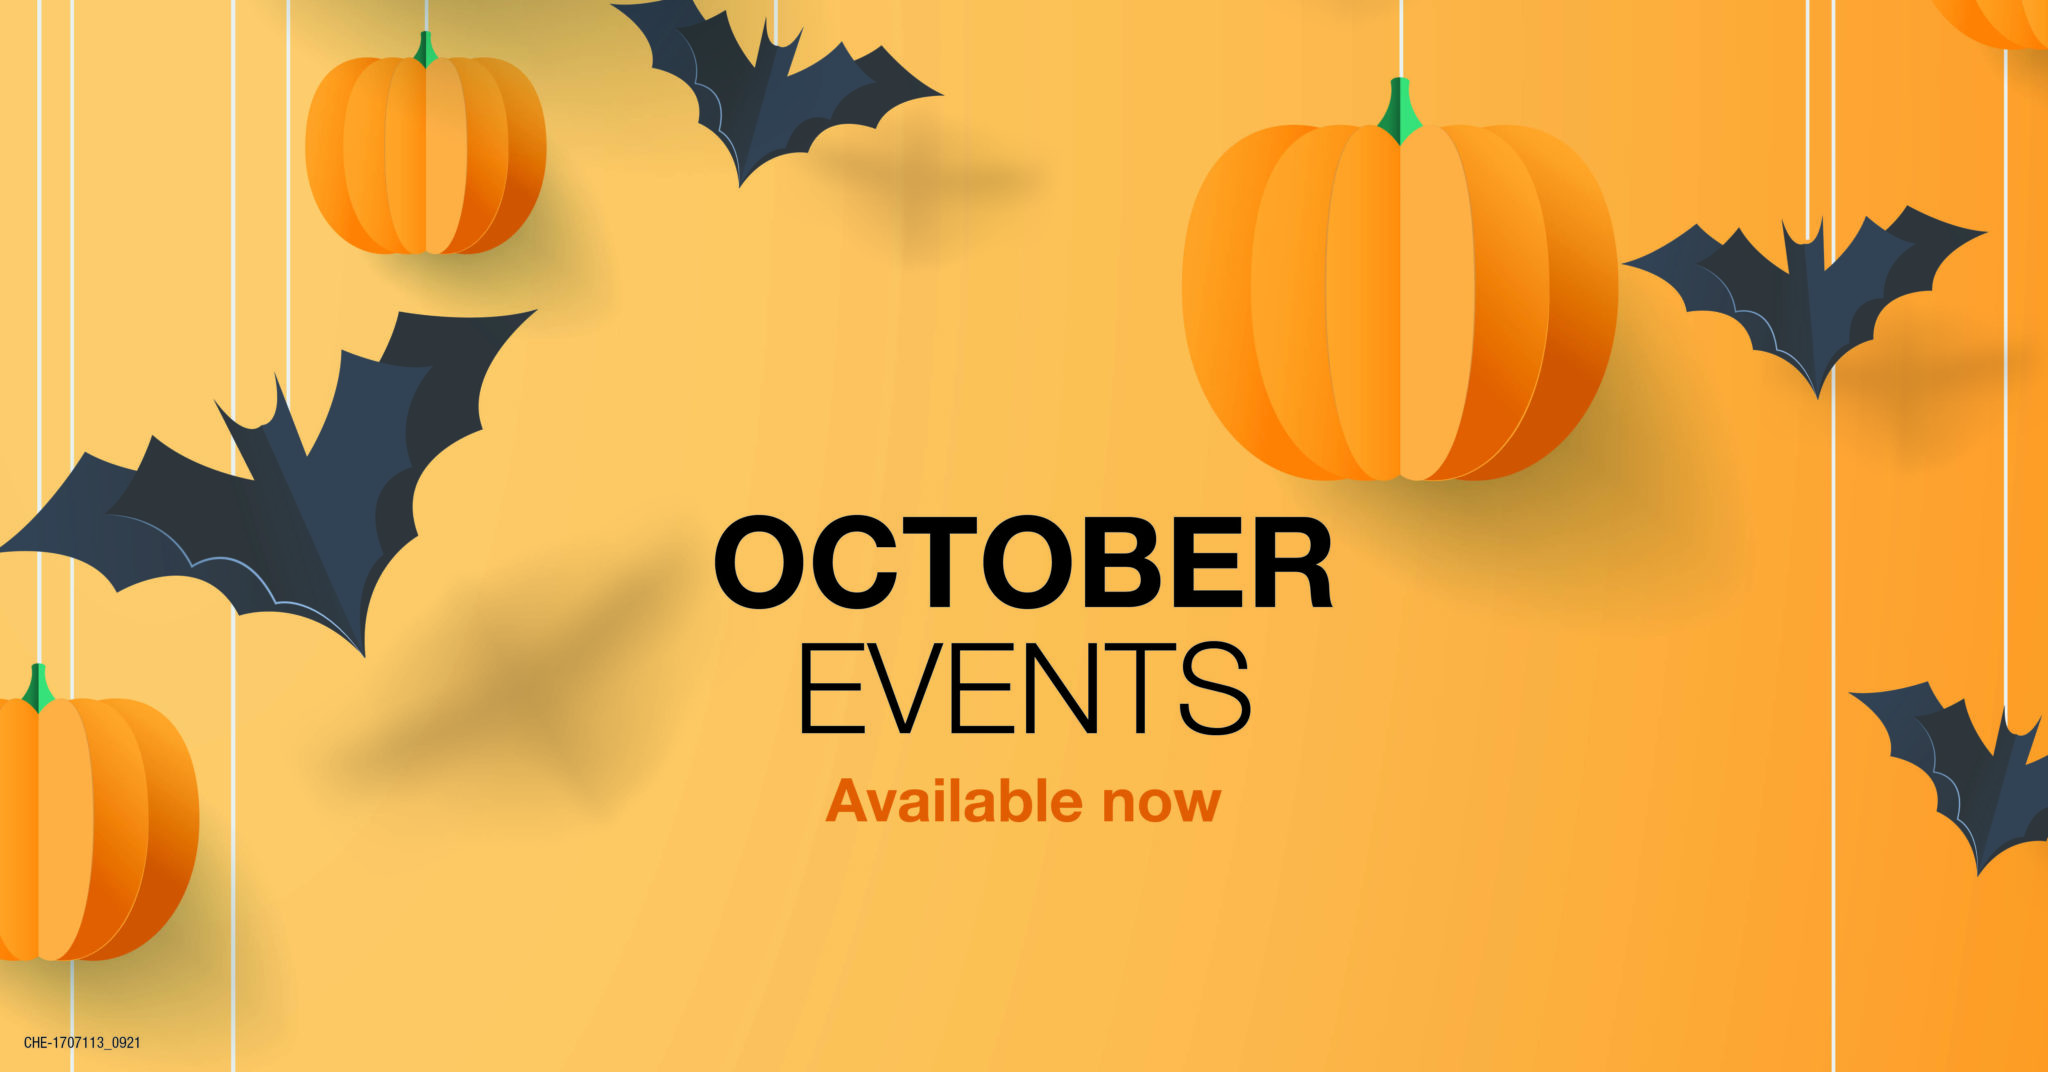 OCTOBER EVENTS Chelsea Wellness Center